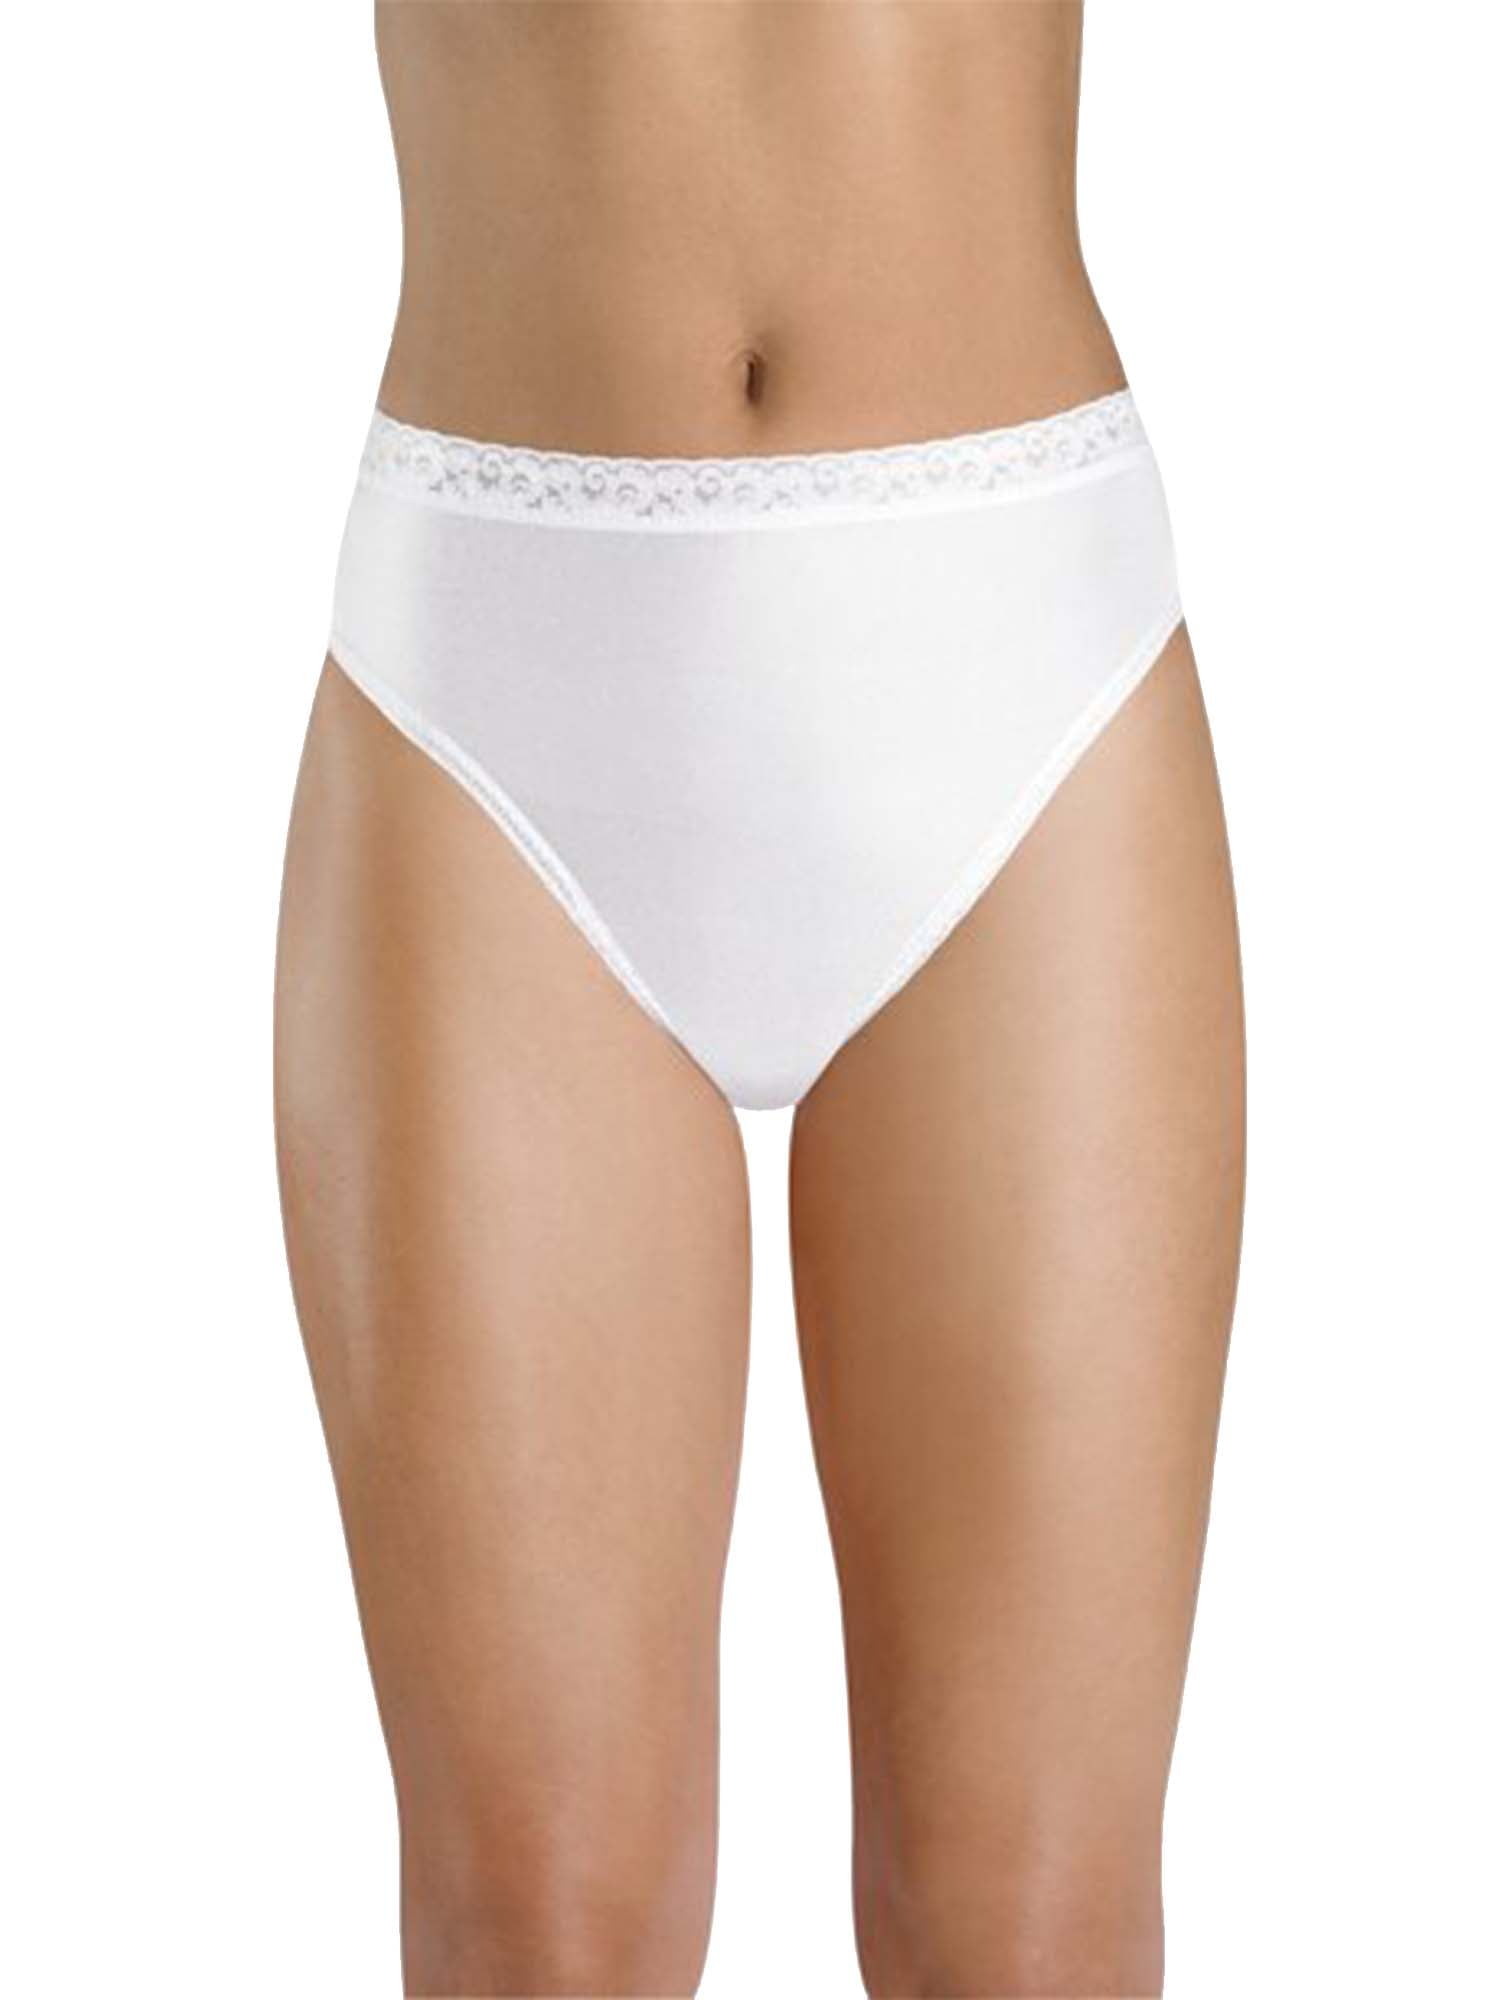 Hanes Women's Nylon Hi-Cut Underwear, 6-Pack